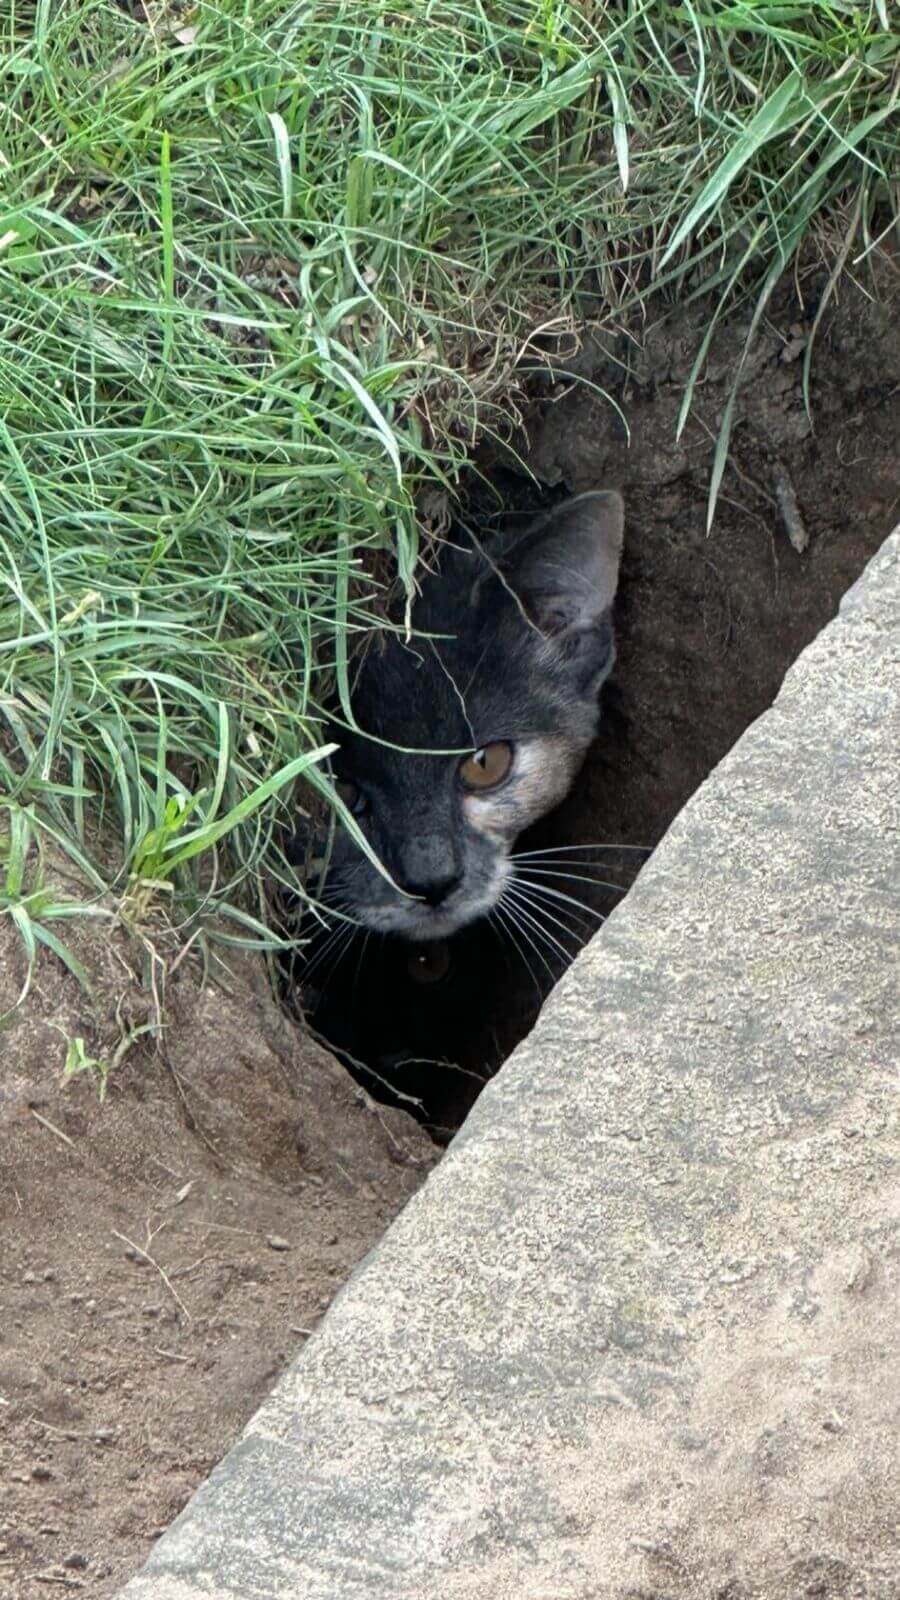 Gato cinza e gato preto dentro de buraco em túmulo no cemitério.